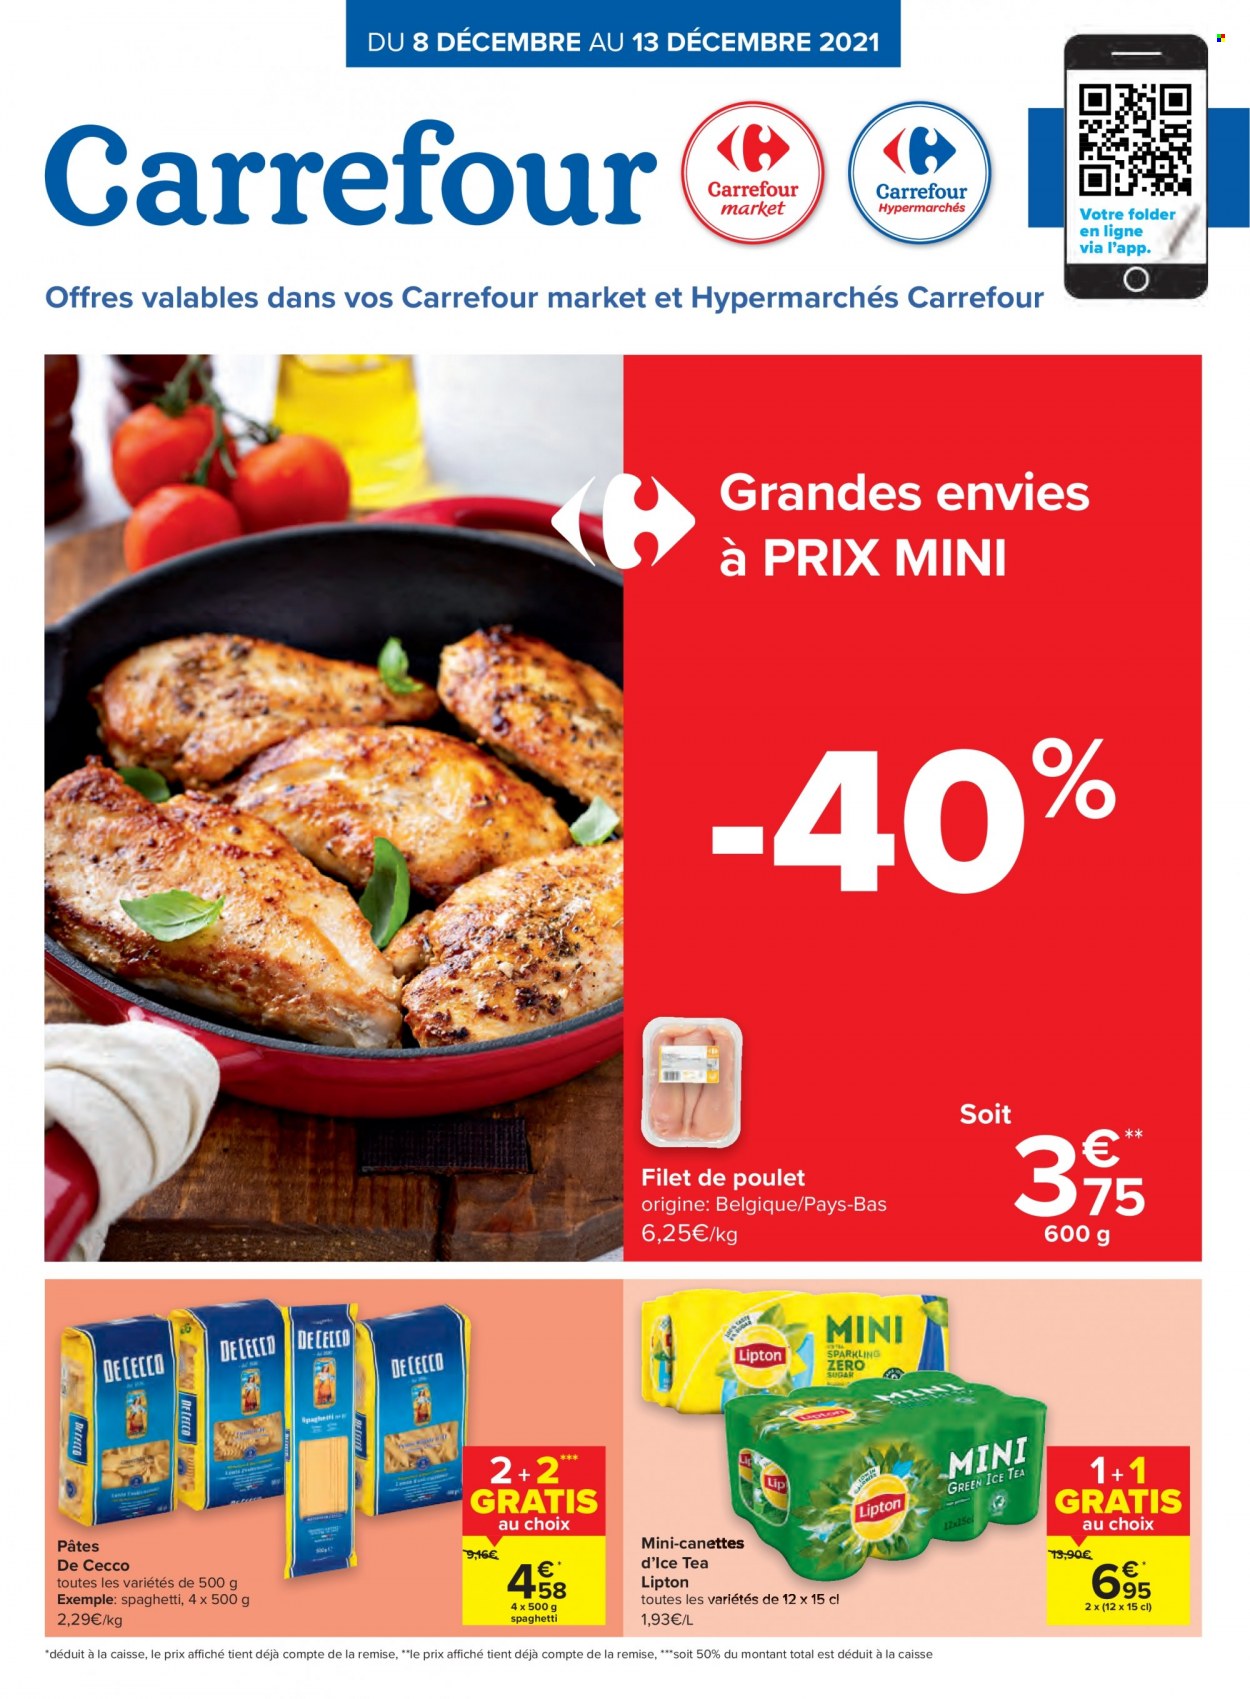 thumbnail - Carrefour-aanbieding - 08/12/2021 - 13/12/2021 -  producten in de aanbieding - spaghetti, Lipton, ice tea, thee. Pagina 1.